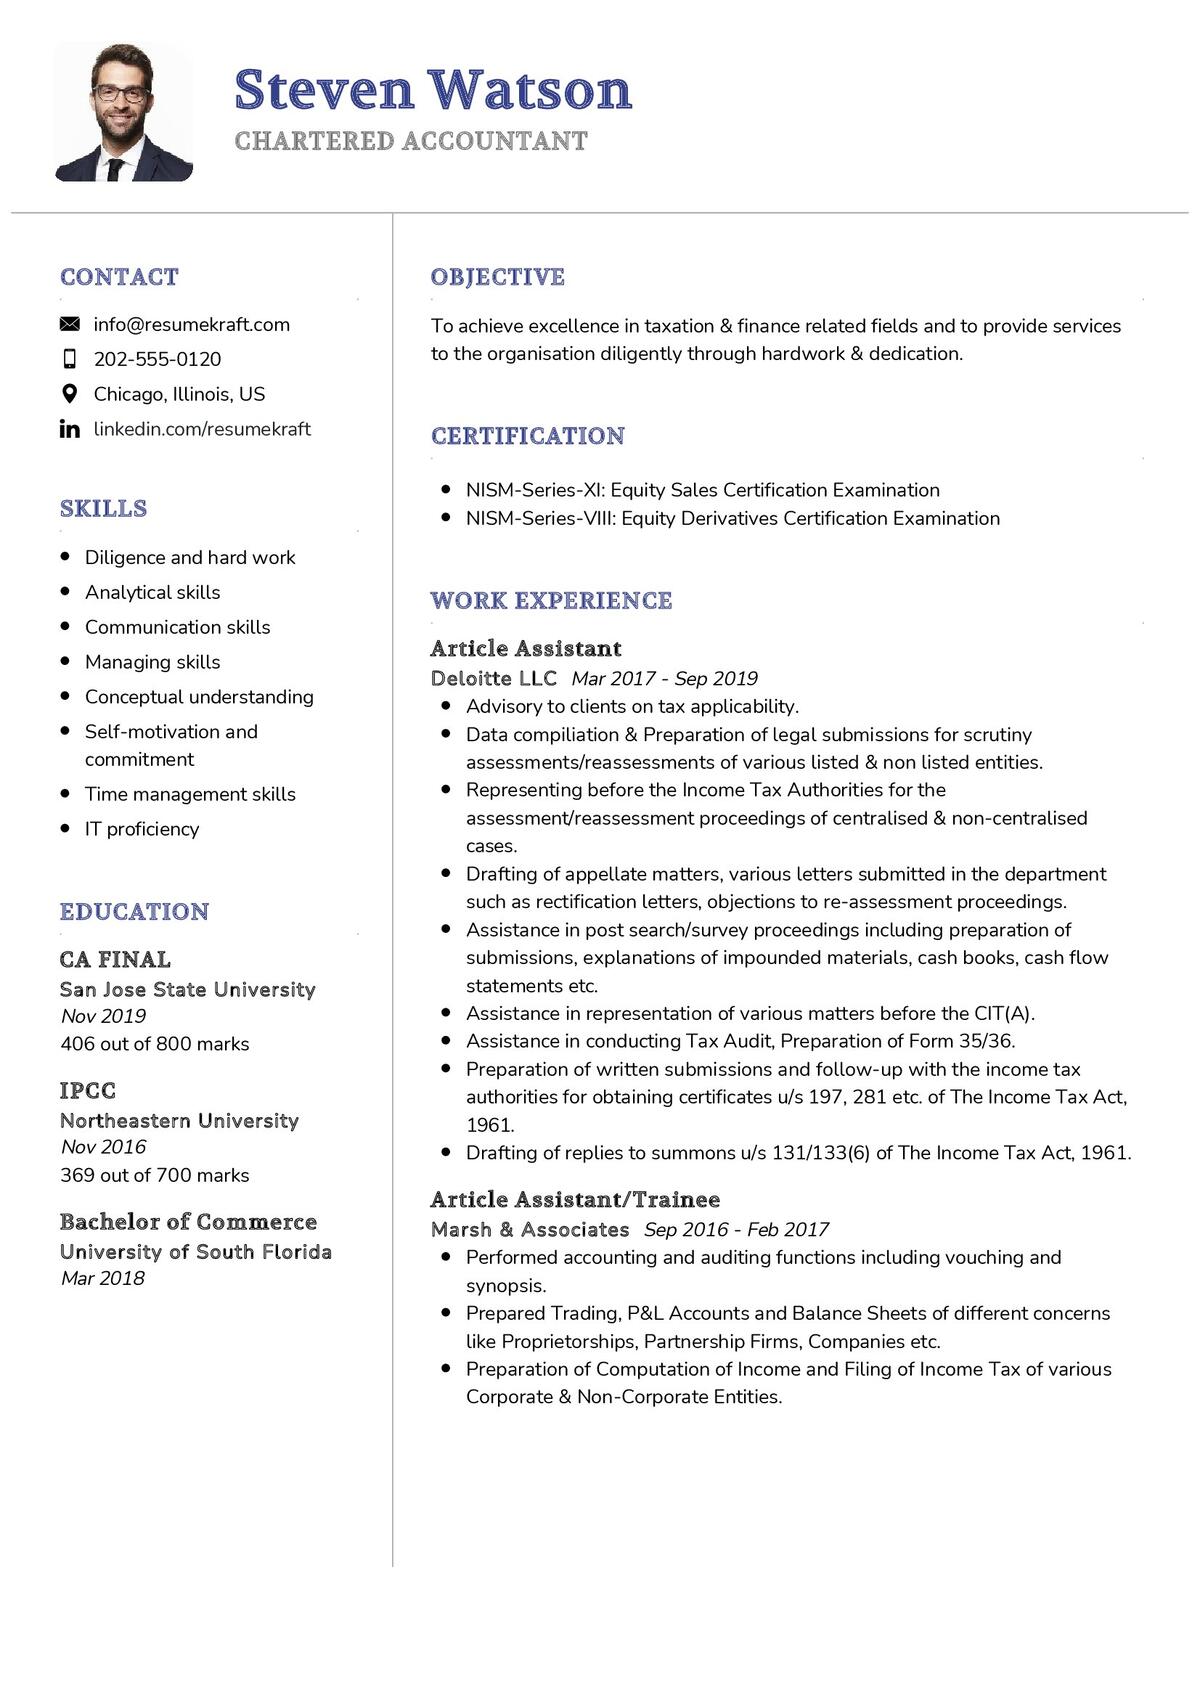 Chartered Accountant CV Example 2023 Writing Tips ResumeKraft